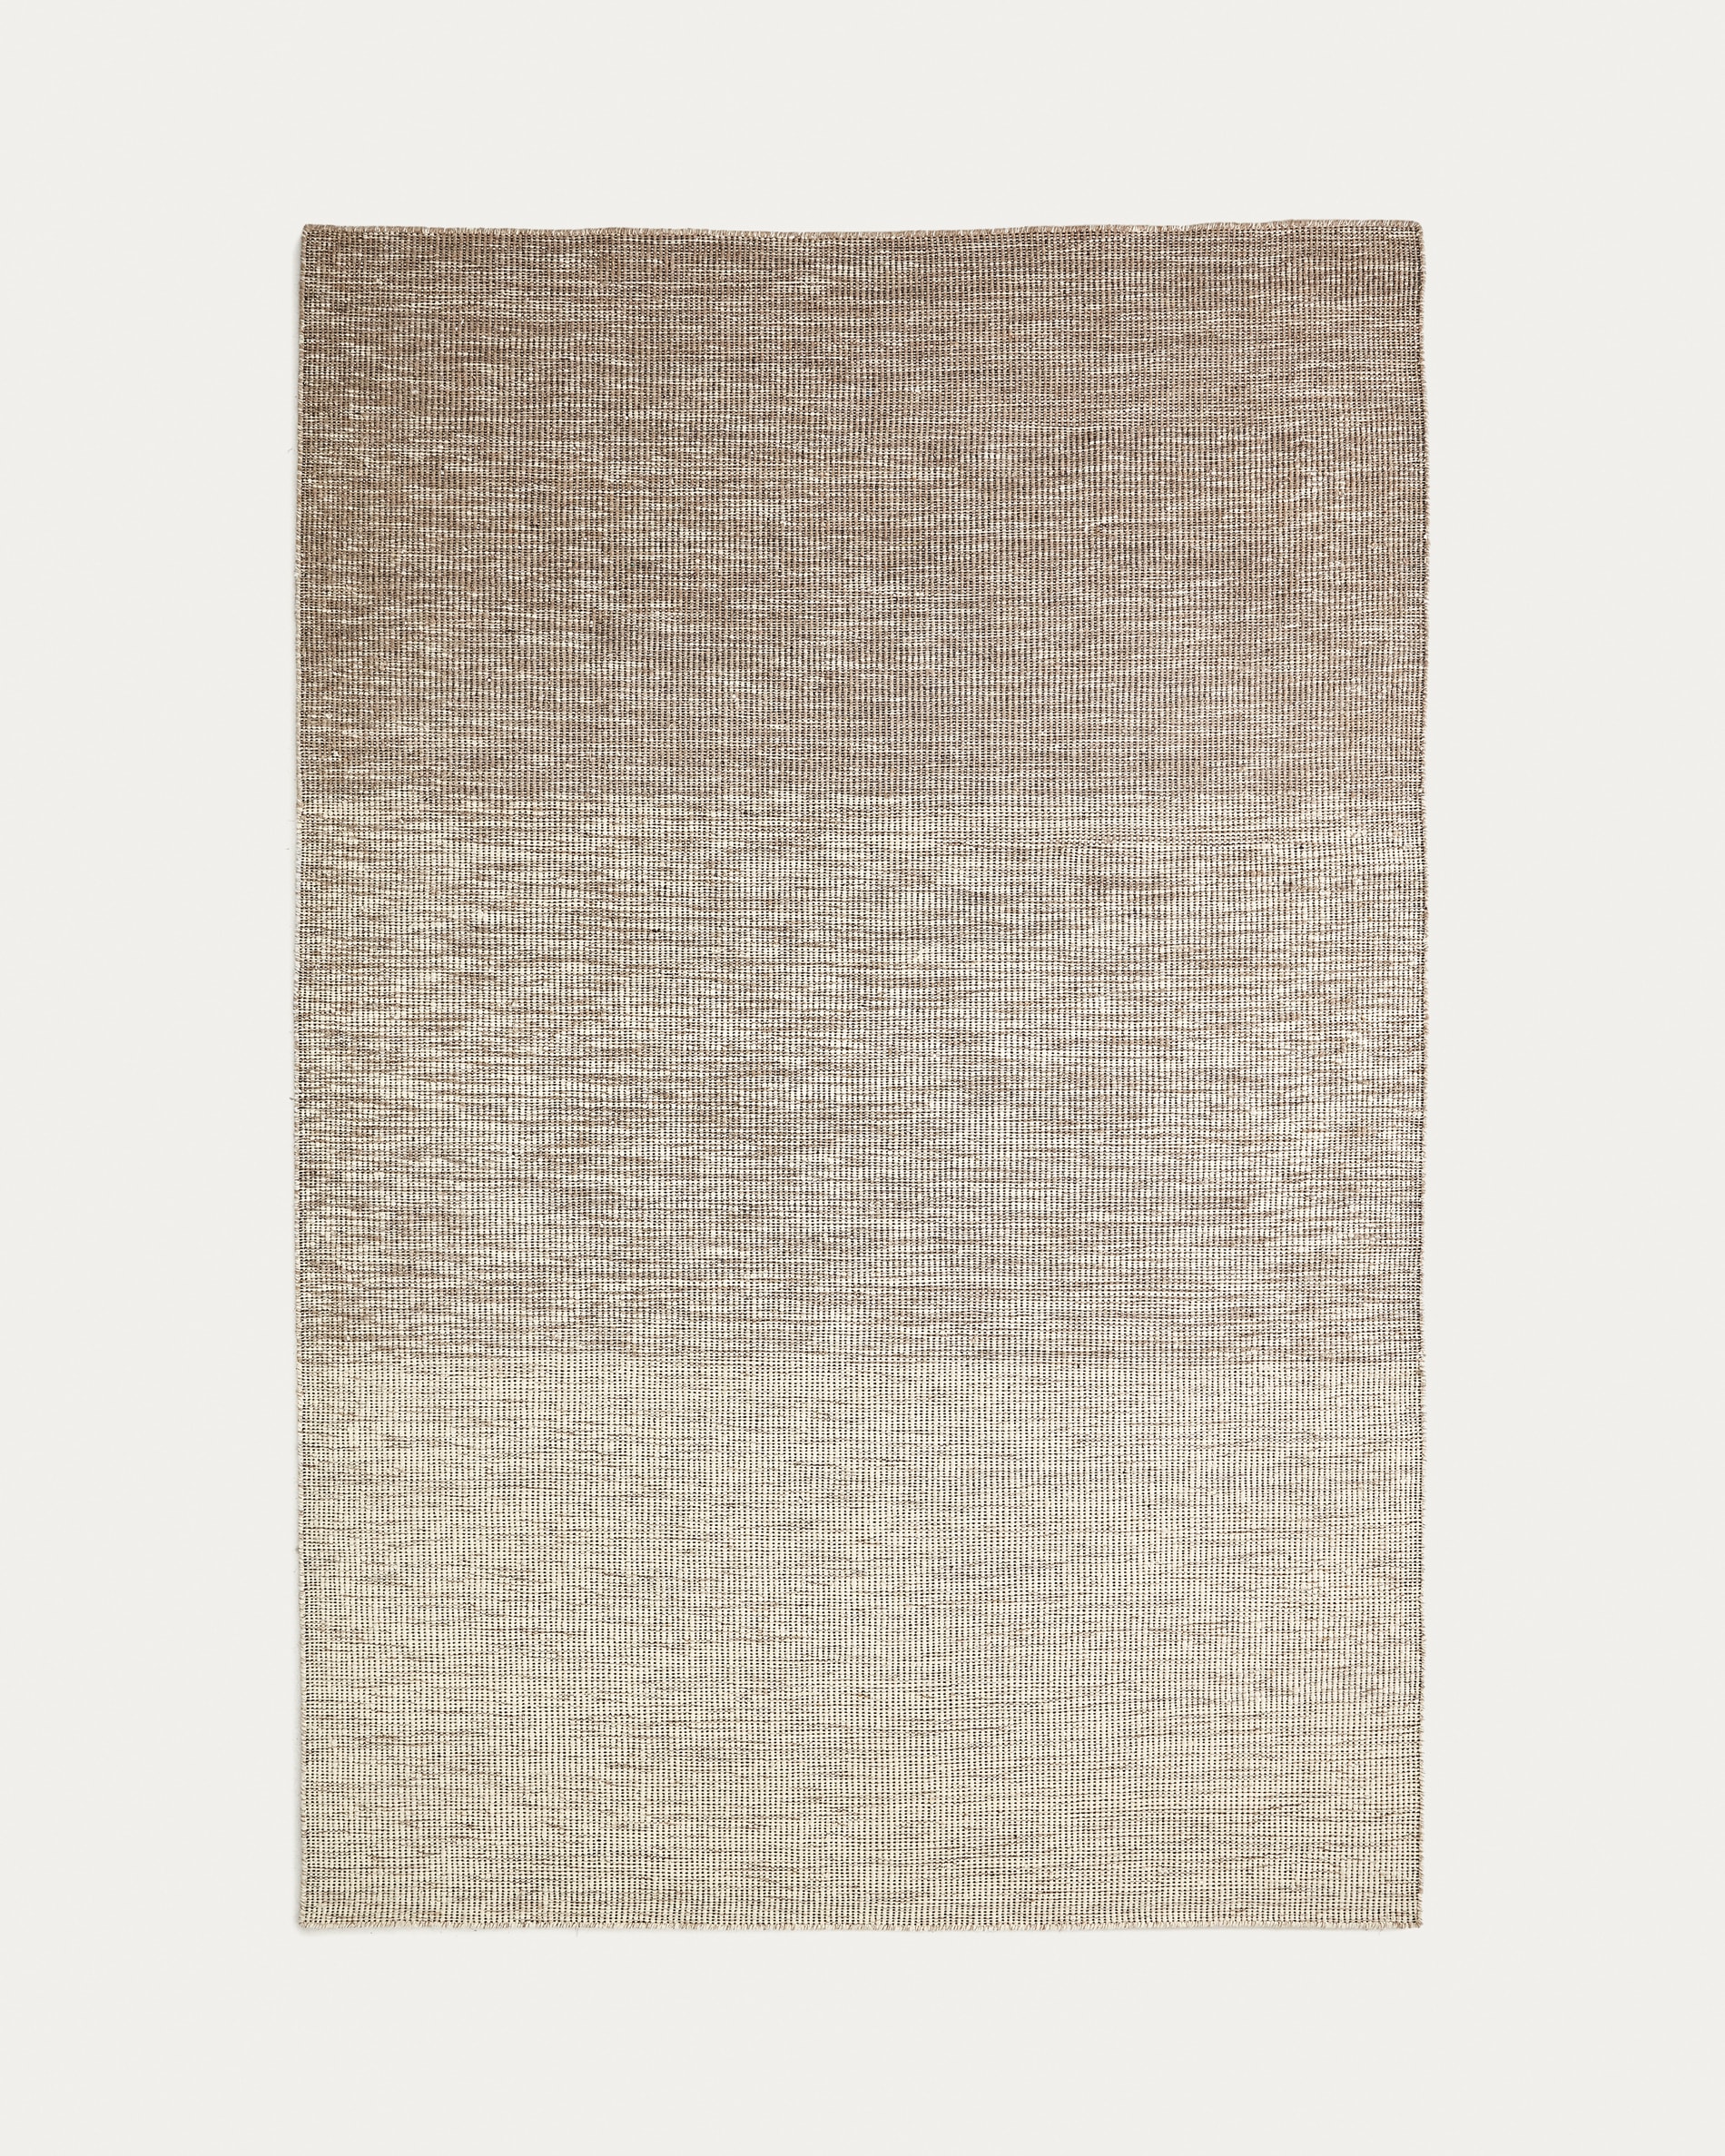 300 cm | carpet Malenka x brown Kave 200 Home wool